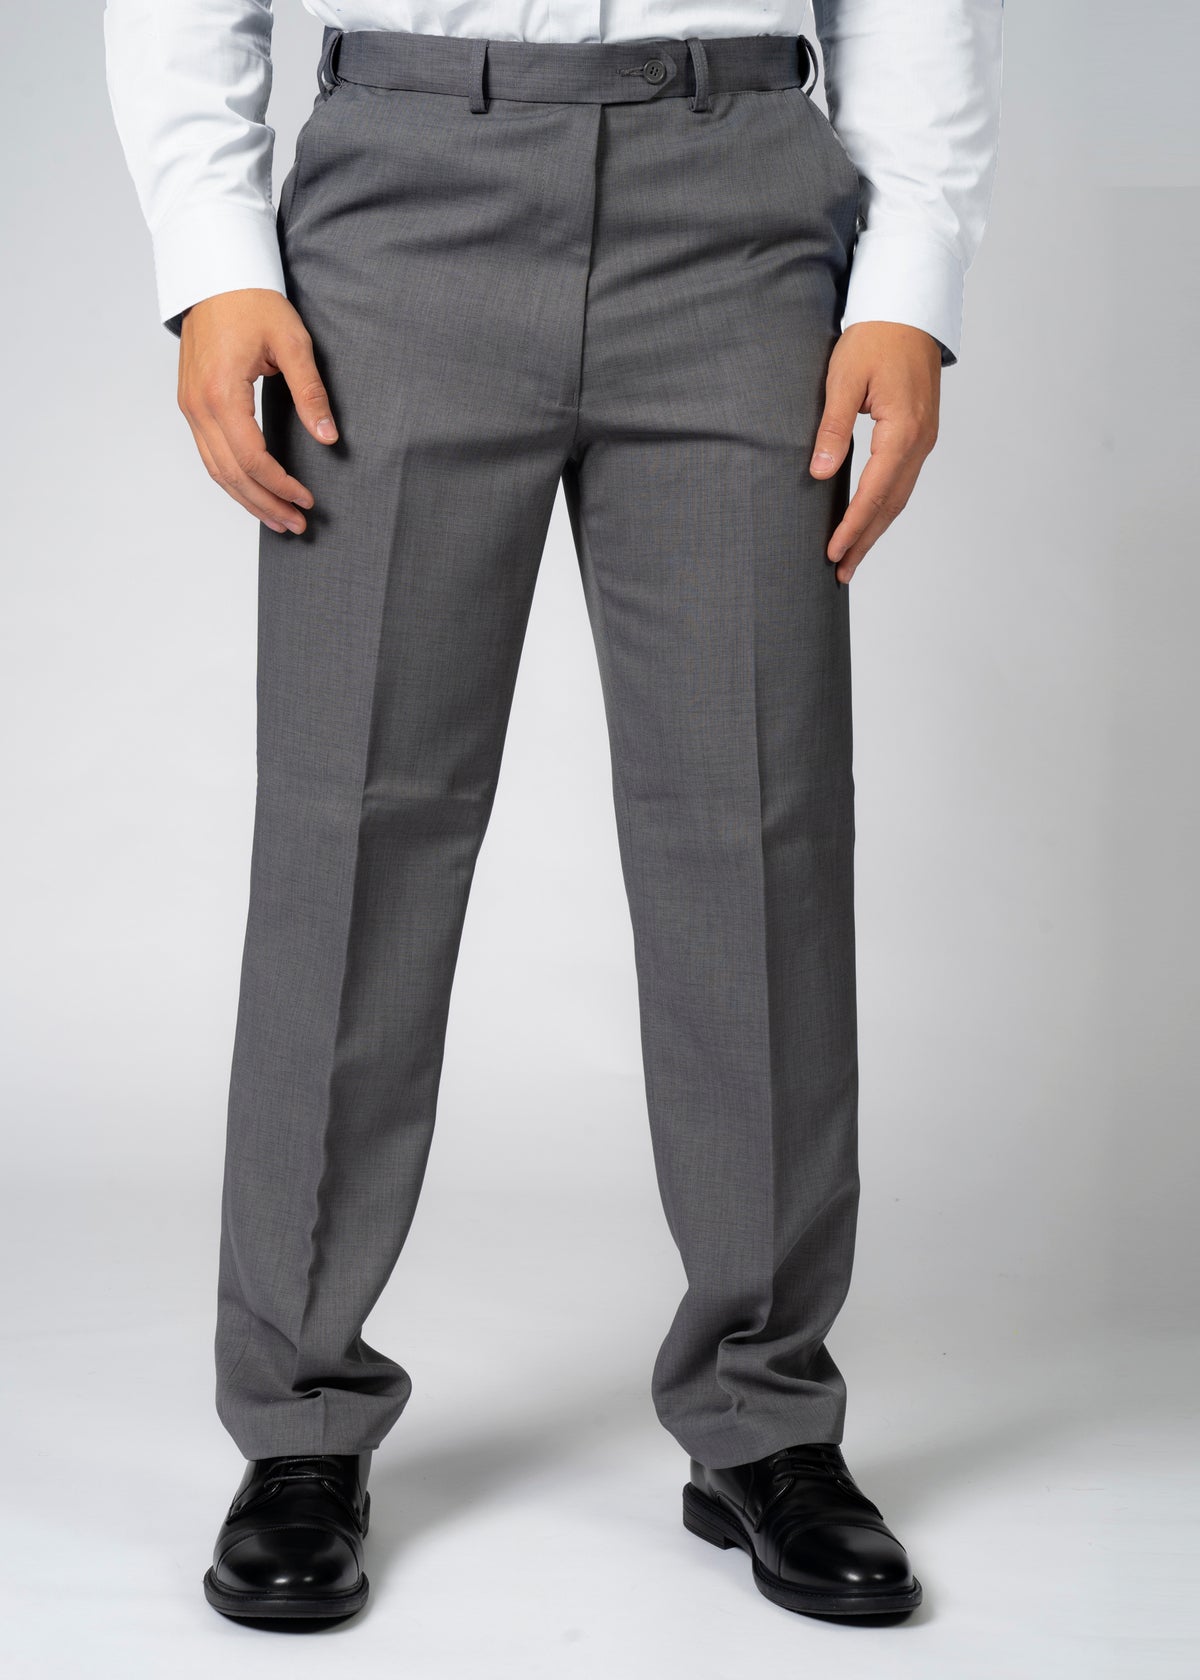 Hart Schaffner Marx Classic Fit Flat-Front Dress Pants | Dillard's